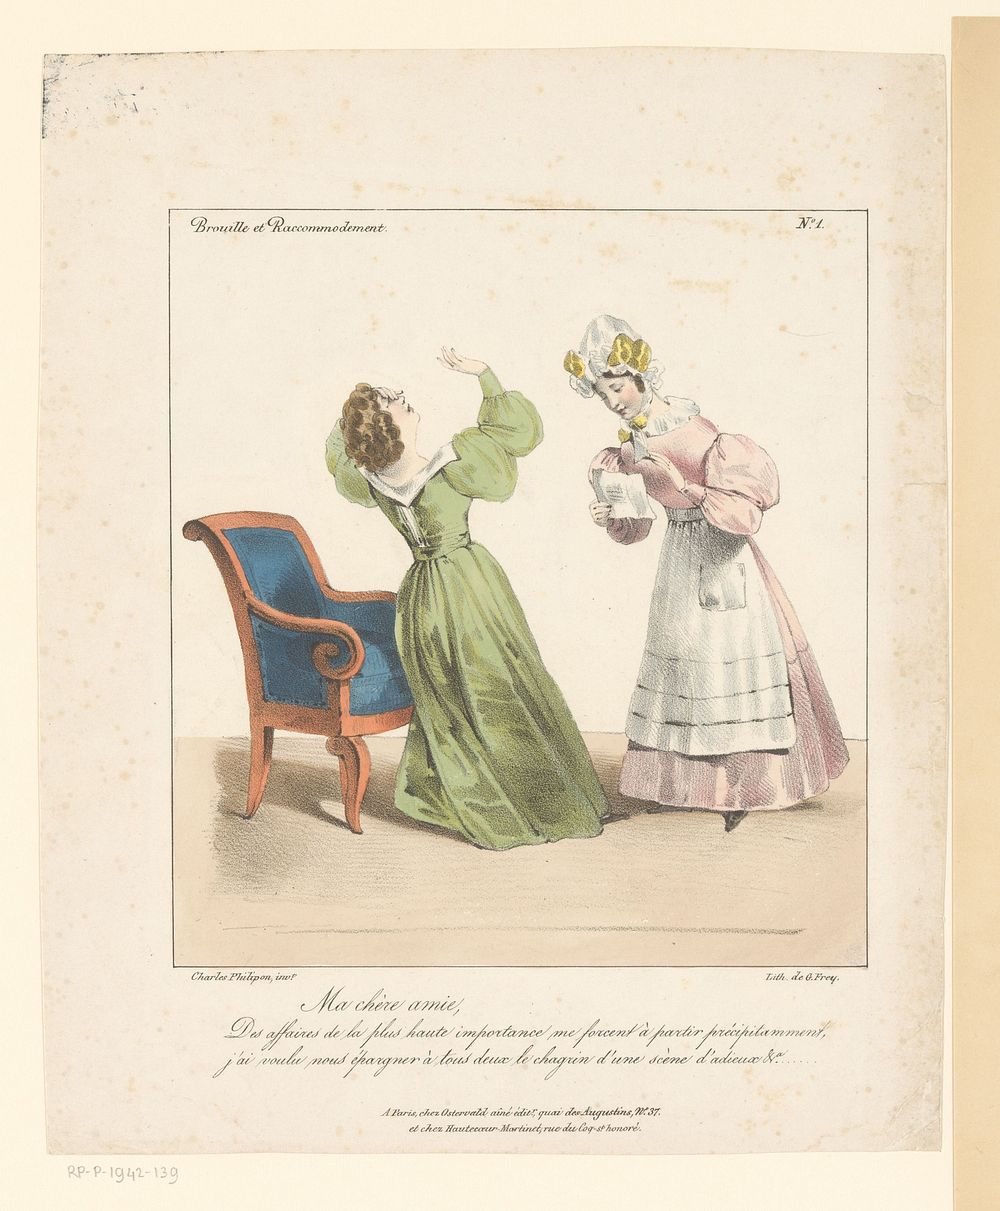 Vrouw valt flauw na afscheid van man per brief (1828 - 1830) by Charles Philipon, Charles Philipon, Georges Jean Frey, Jean…